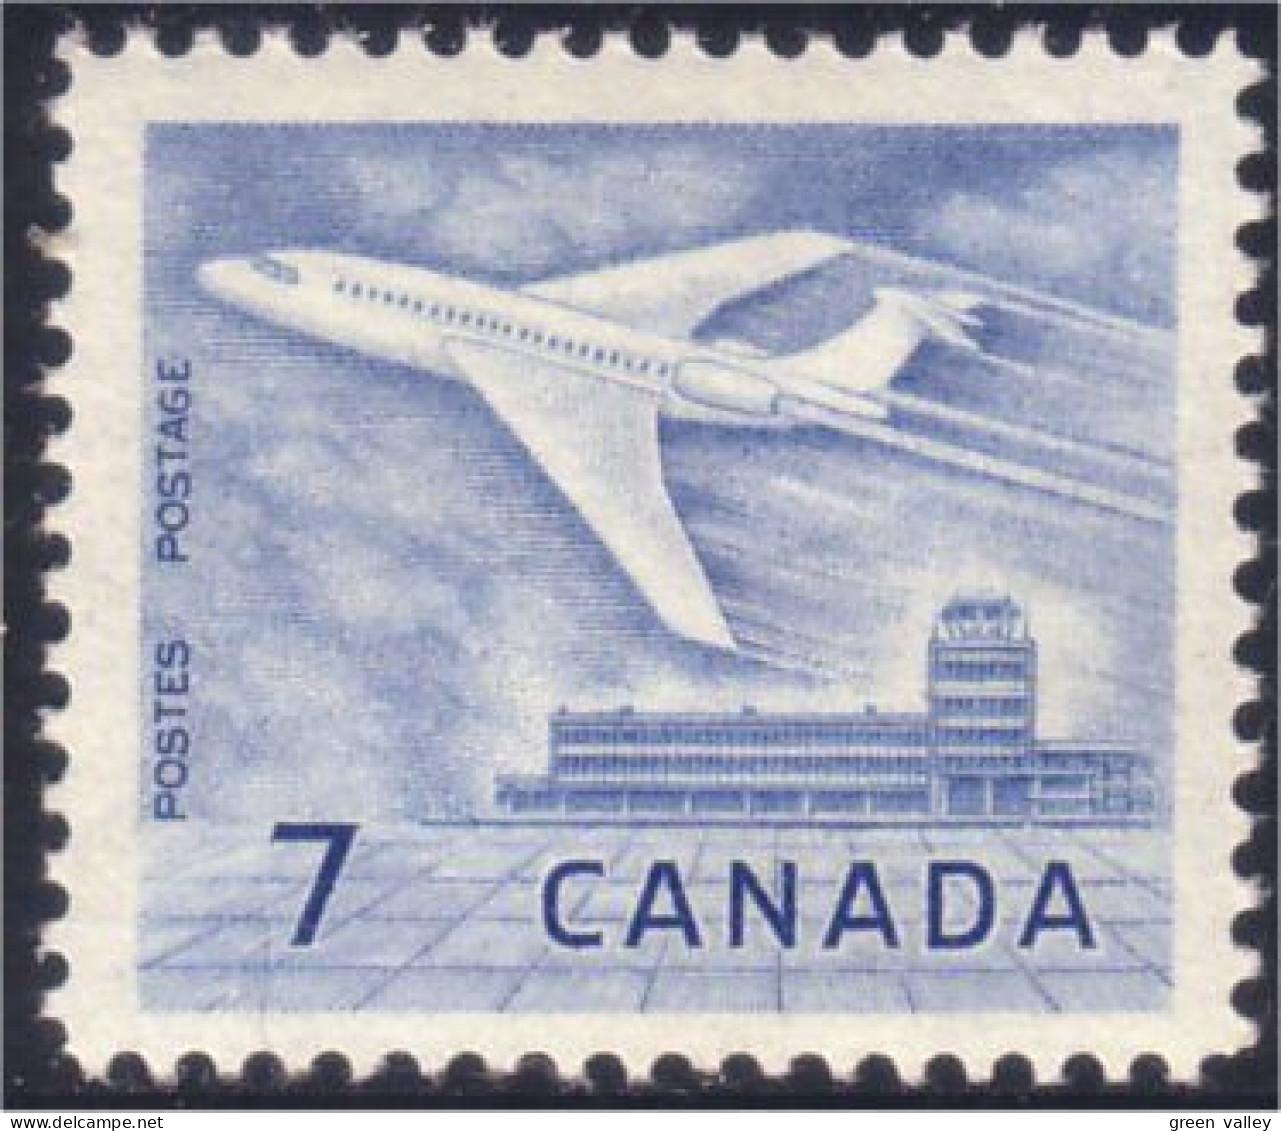 Canada Avion Jet Airplane MNH ** Neuf SC (04-14a) - Ungebraucht